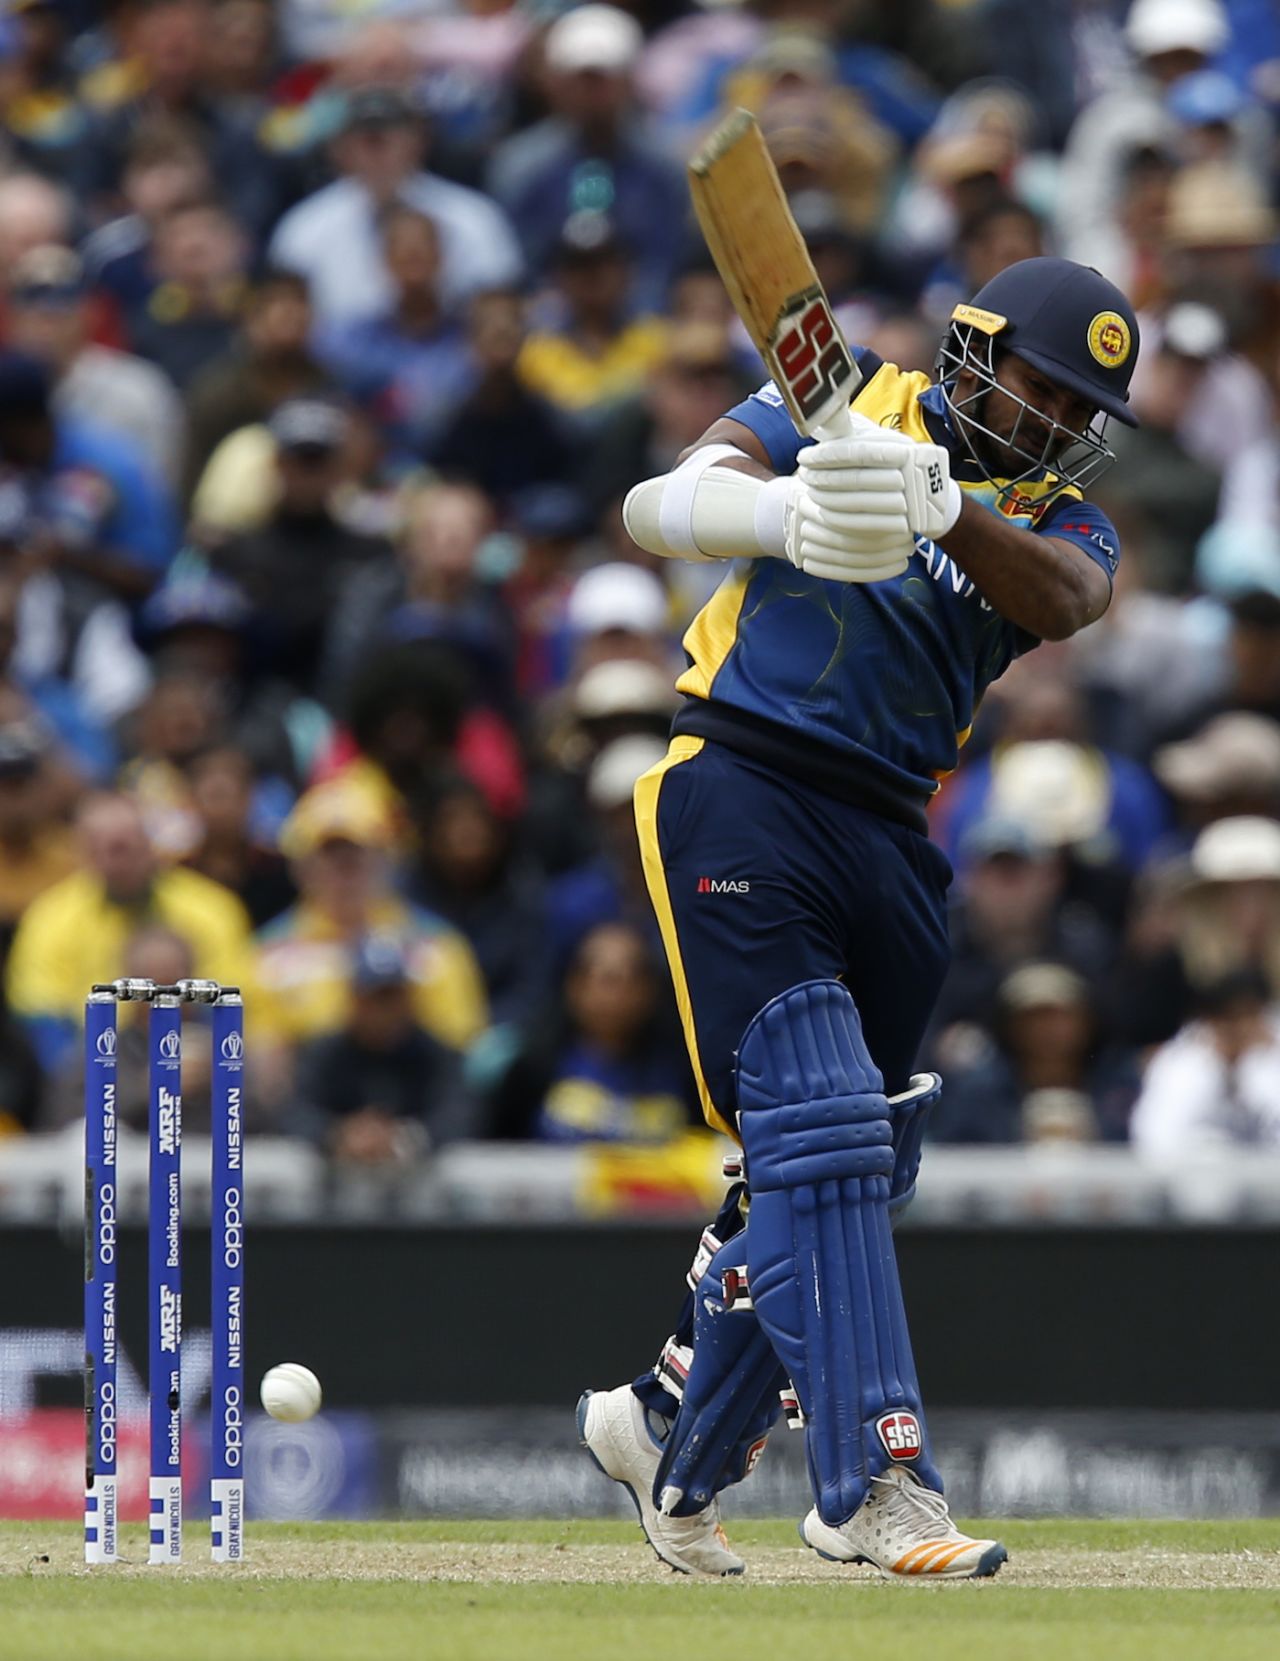 Kusal Perera gave Sri Lanka a cracking start, Australia v Sri Lanka, World Cup 2019, The Oval, June 15, 2019